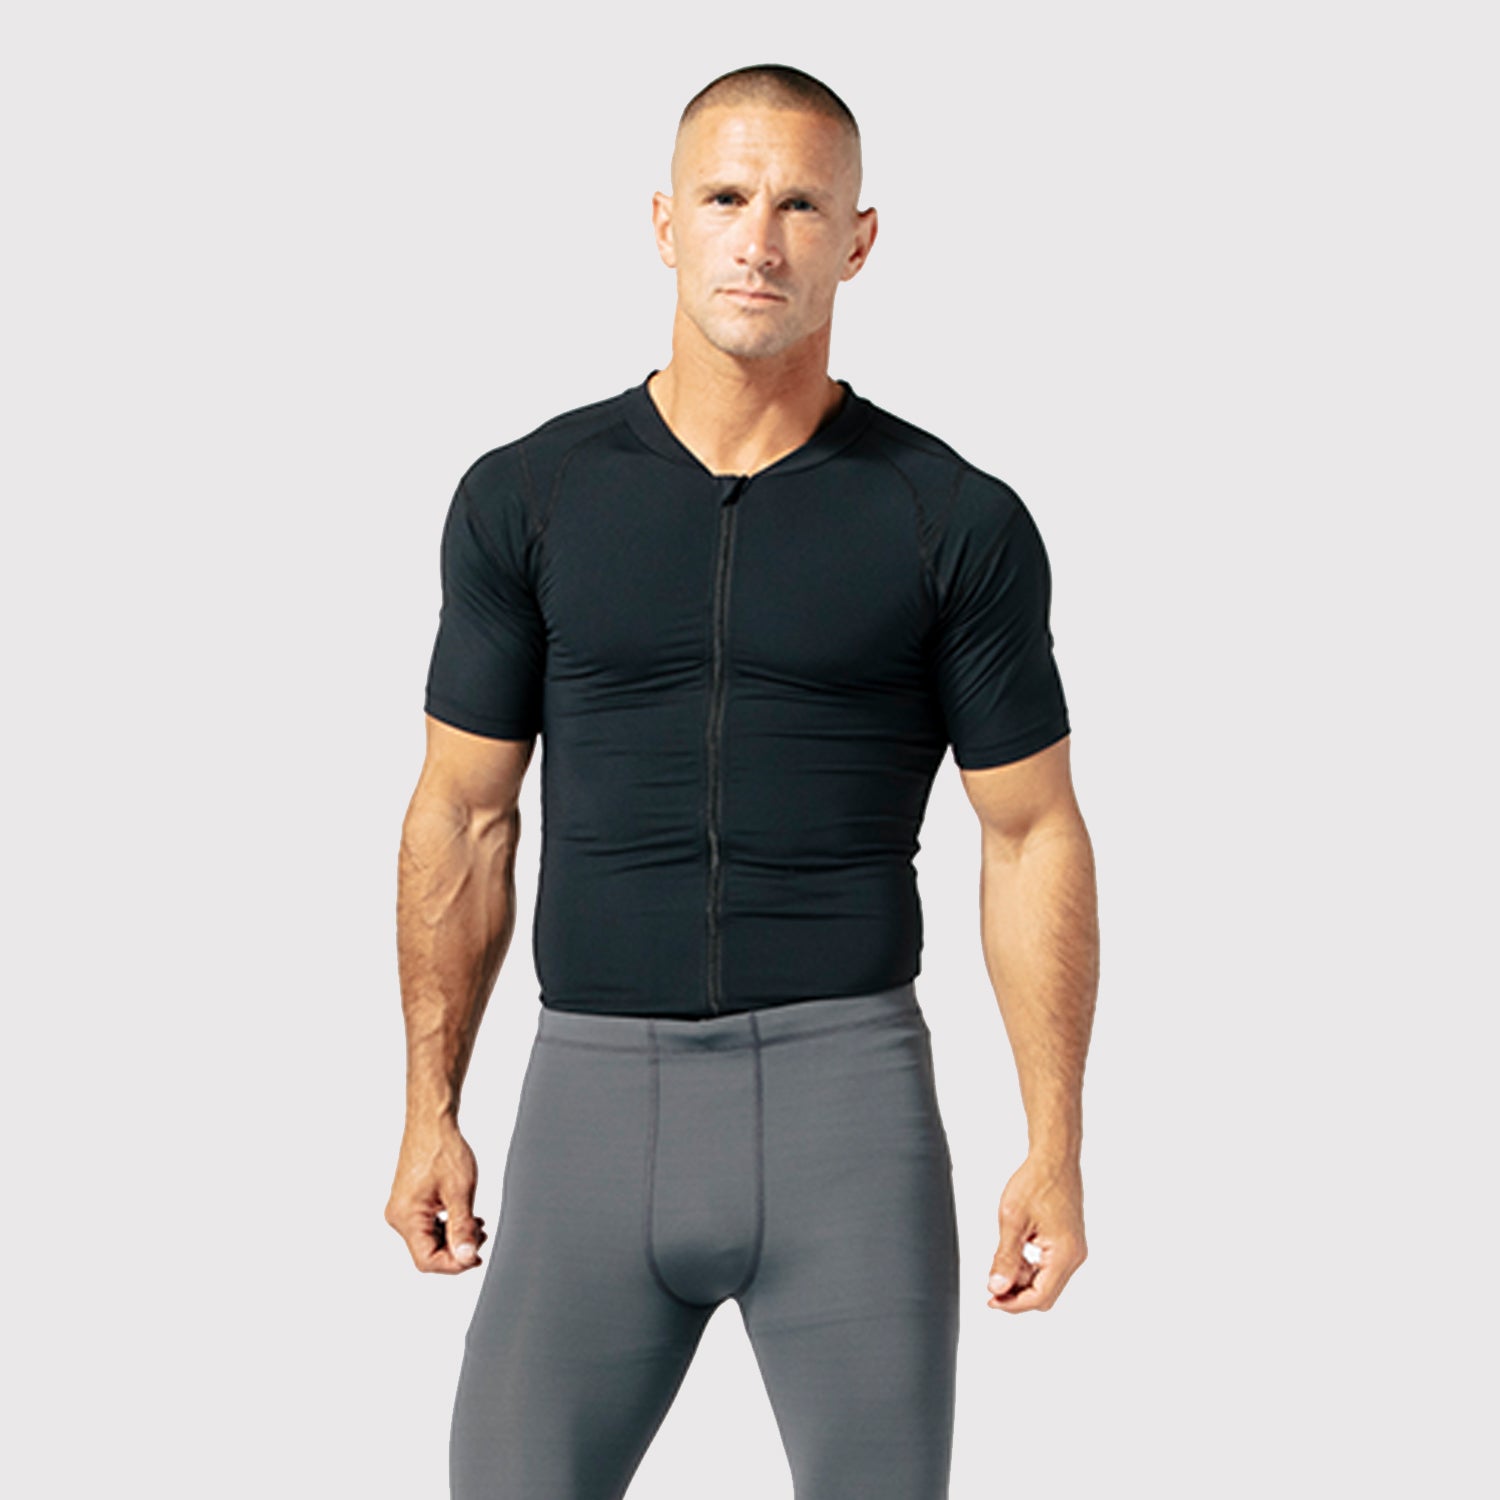 DFND Men's Short Sleeve Compression Shirt with Zipper Black / L